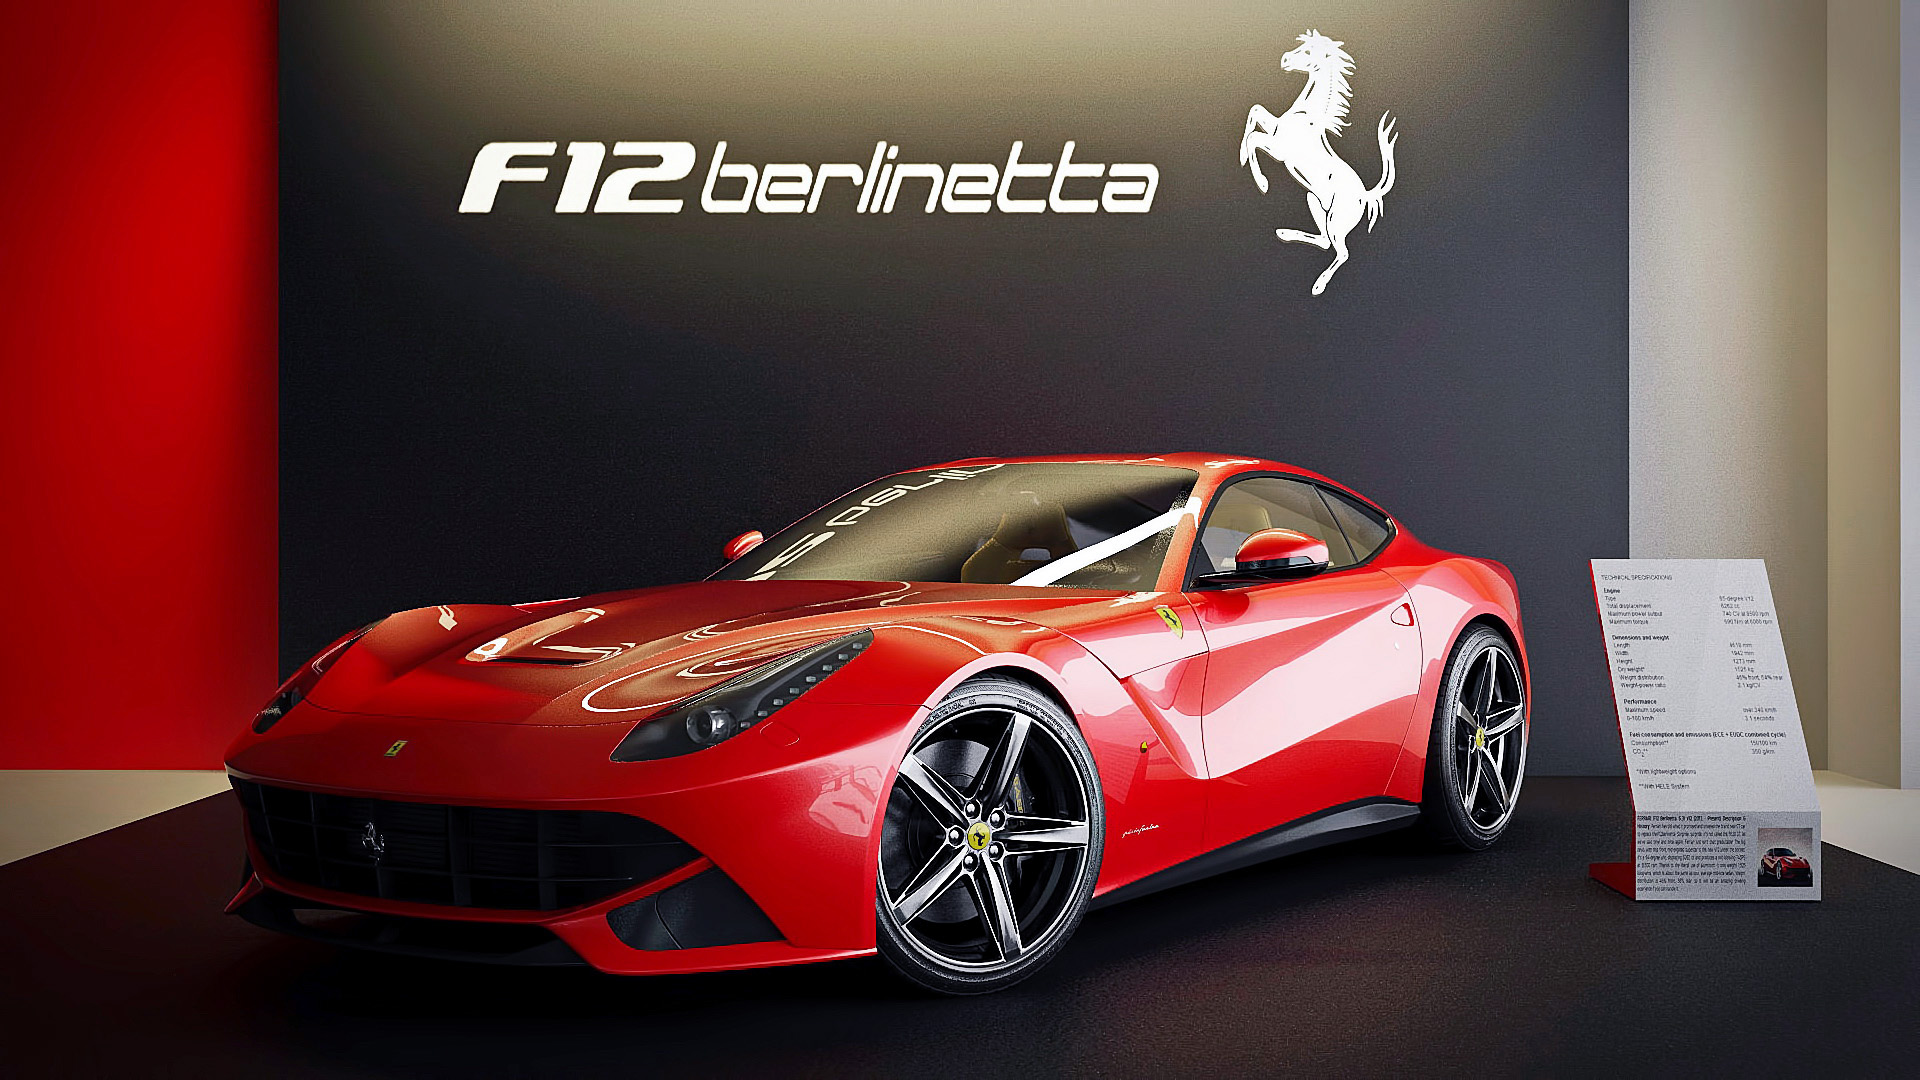 Cool Ferrari F12 Berlita Wallpaper